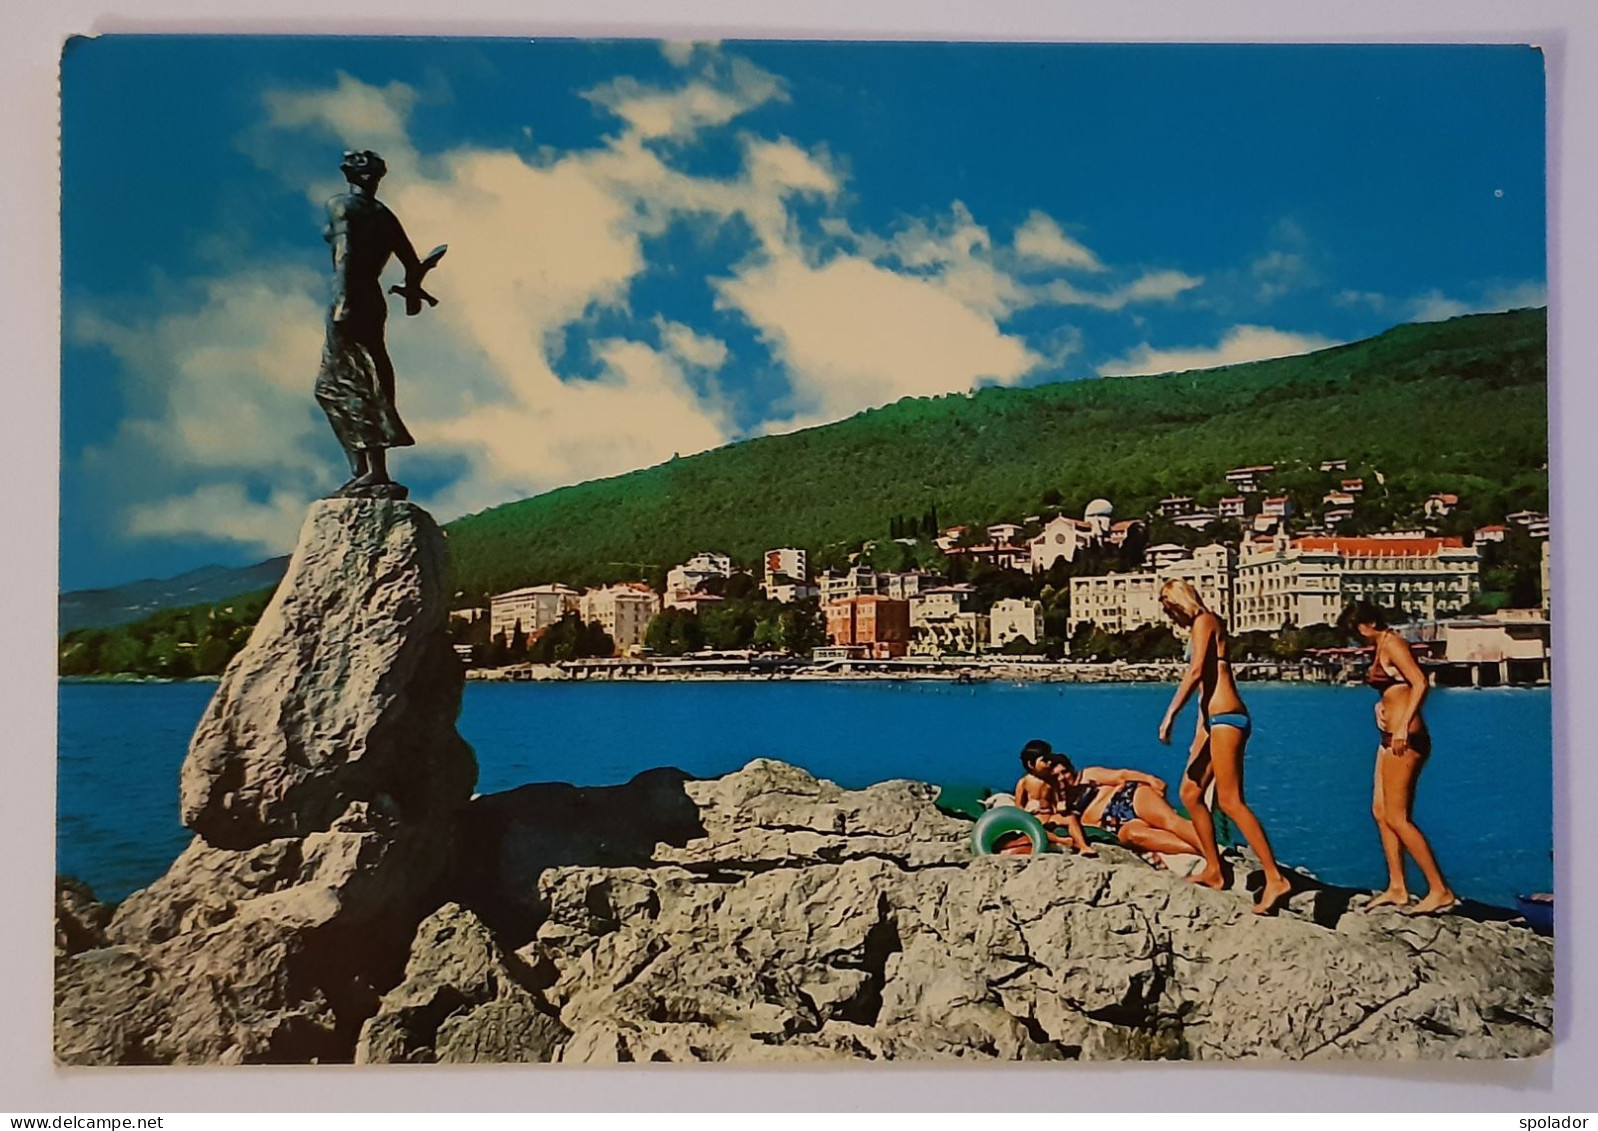 OPATIJA-Vintage Postcard-Ex-Yugoslavia-Croatia-Istra-Hrvatska-used With Stamp-1978 - Jugoslavia